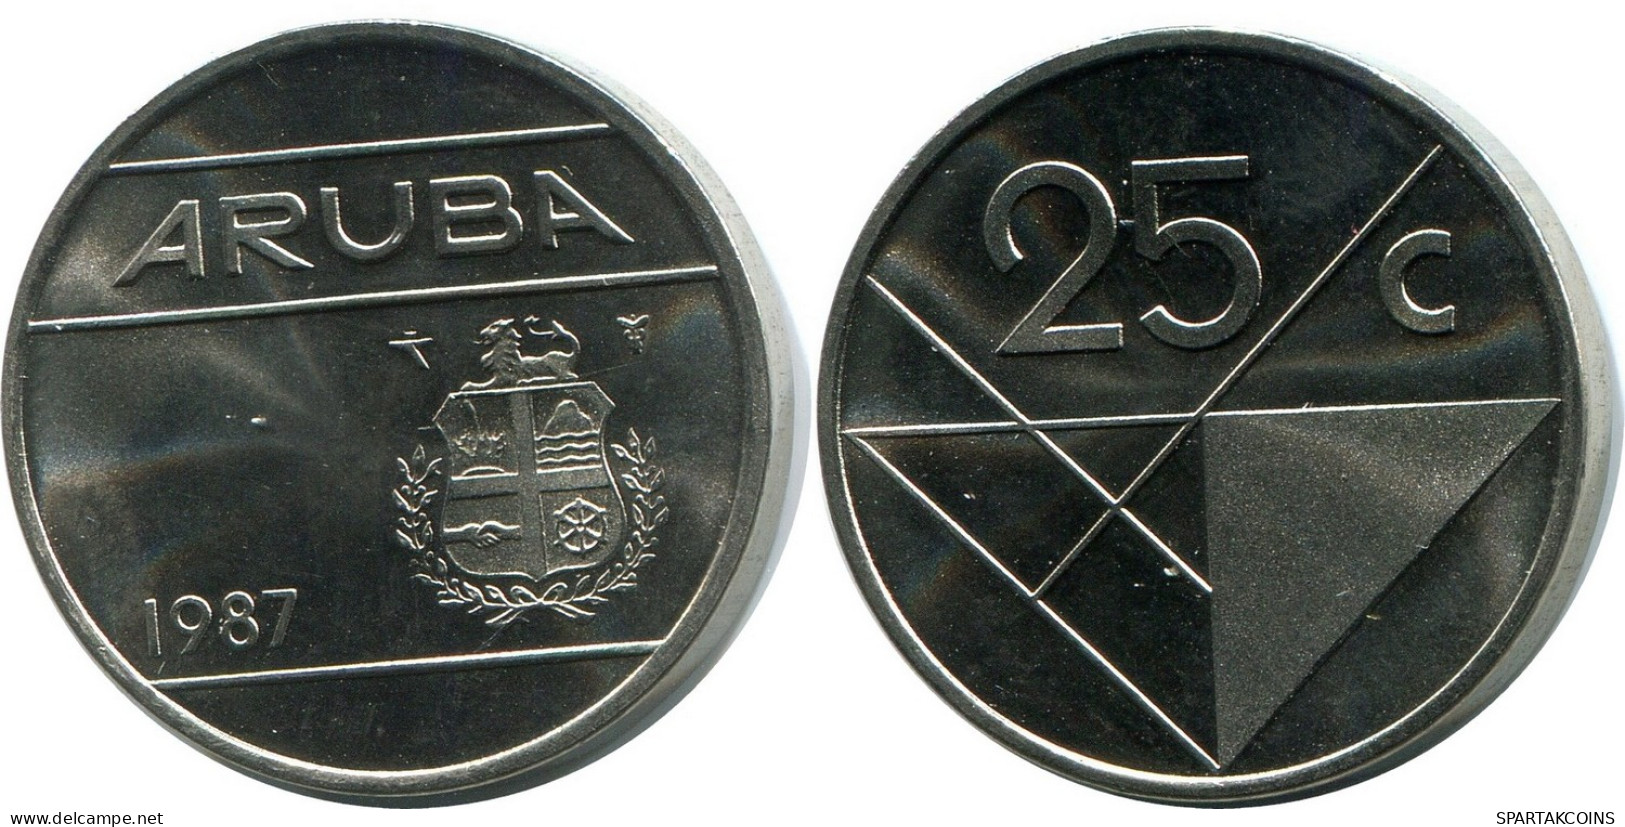 25 CENTS 1987 ARUBA Münze (From BU Mint Set) #AH067.D - Aruba